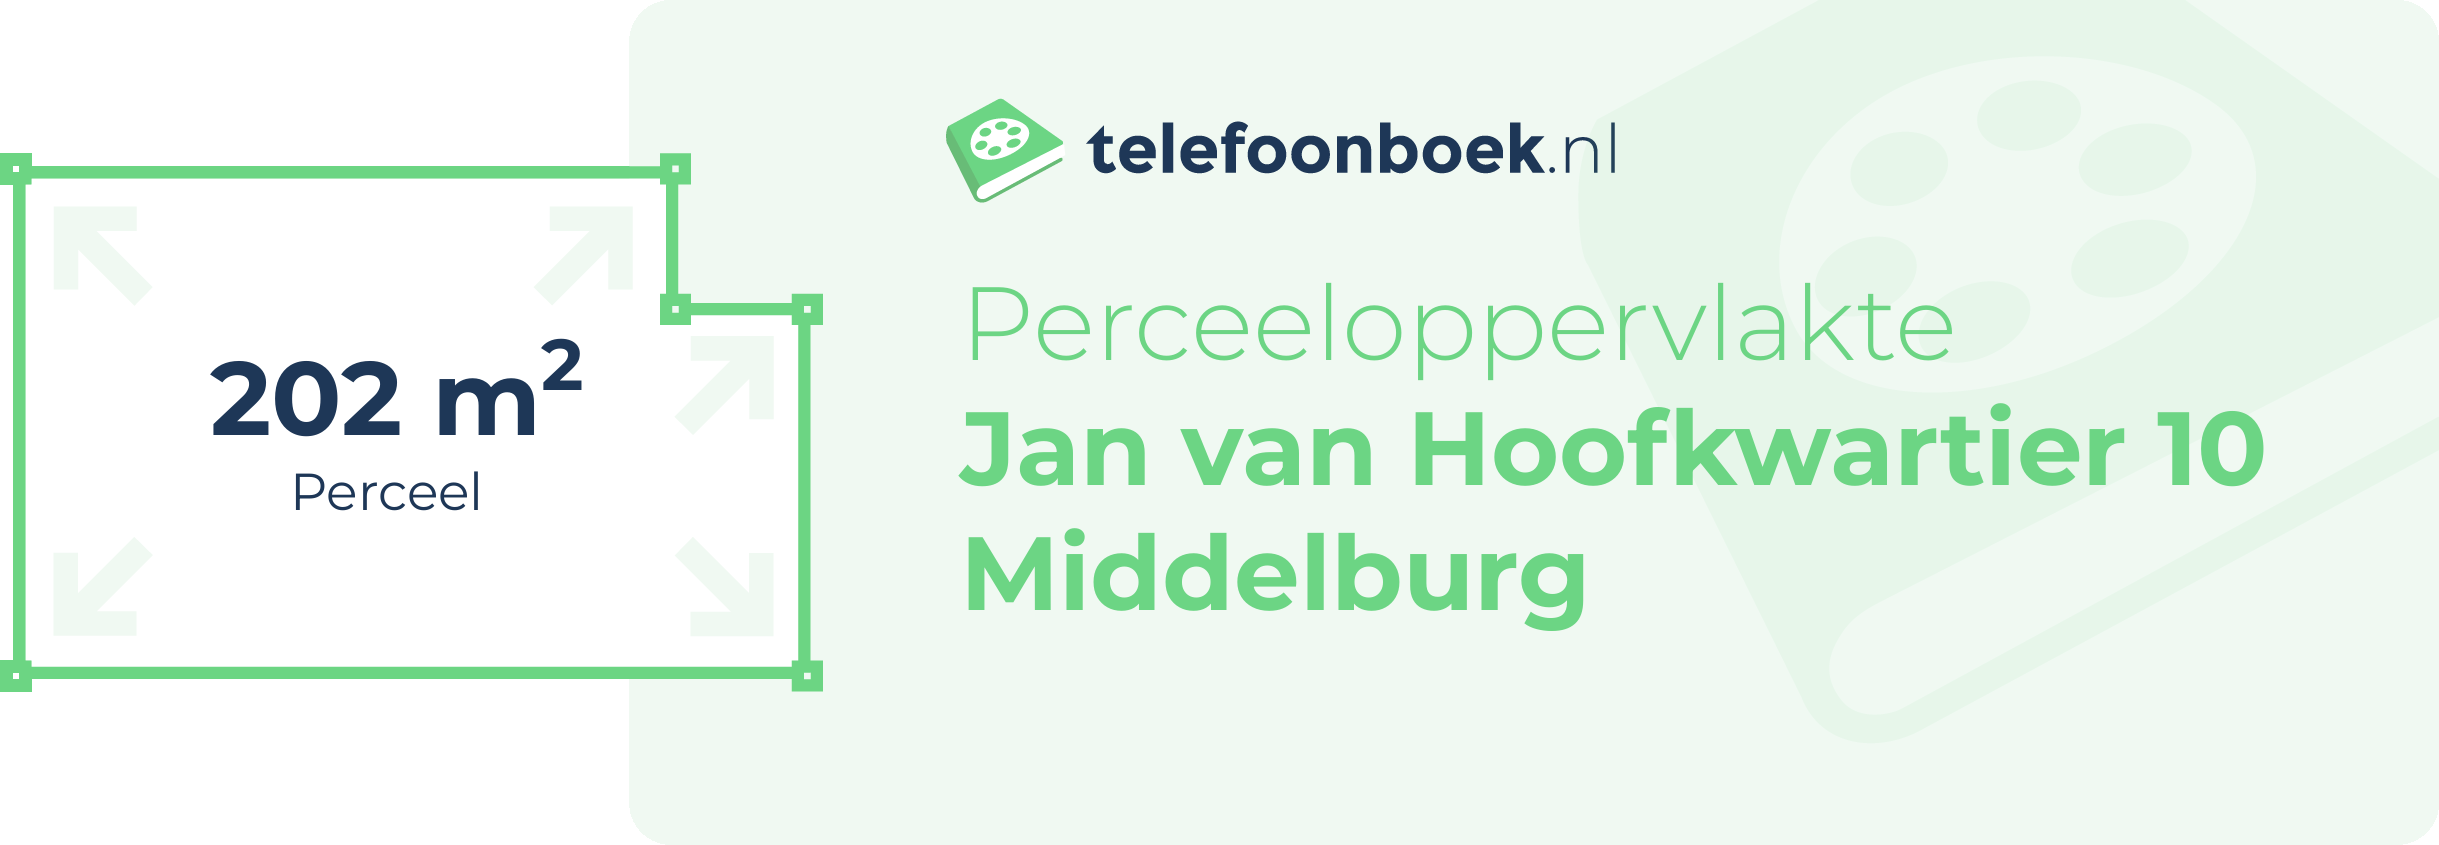 Perceeloppervlakte Jan Van Hoofkwartier 10 Middelburg